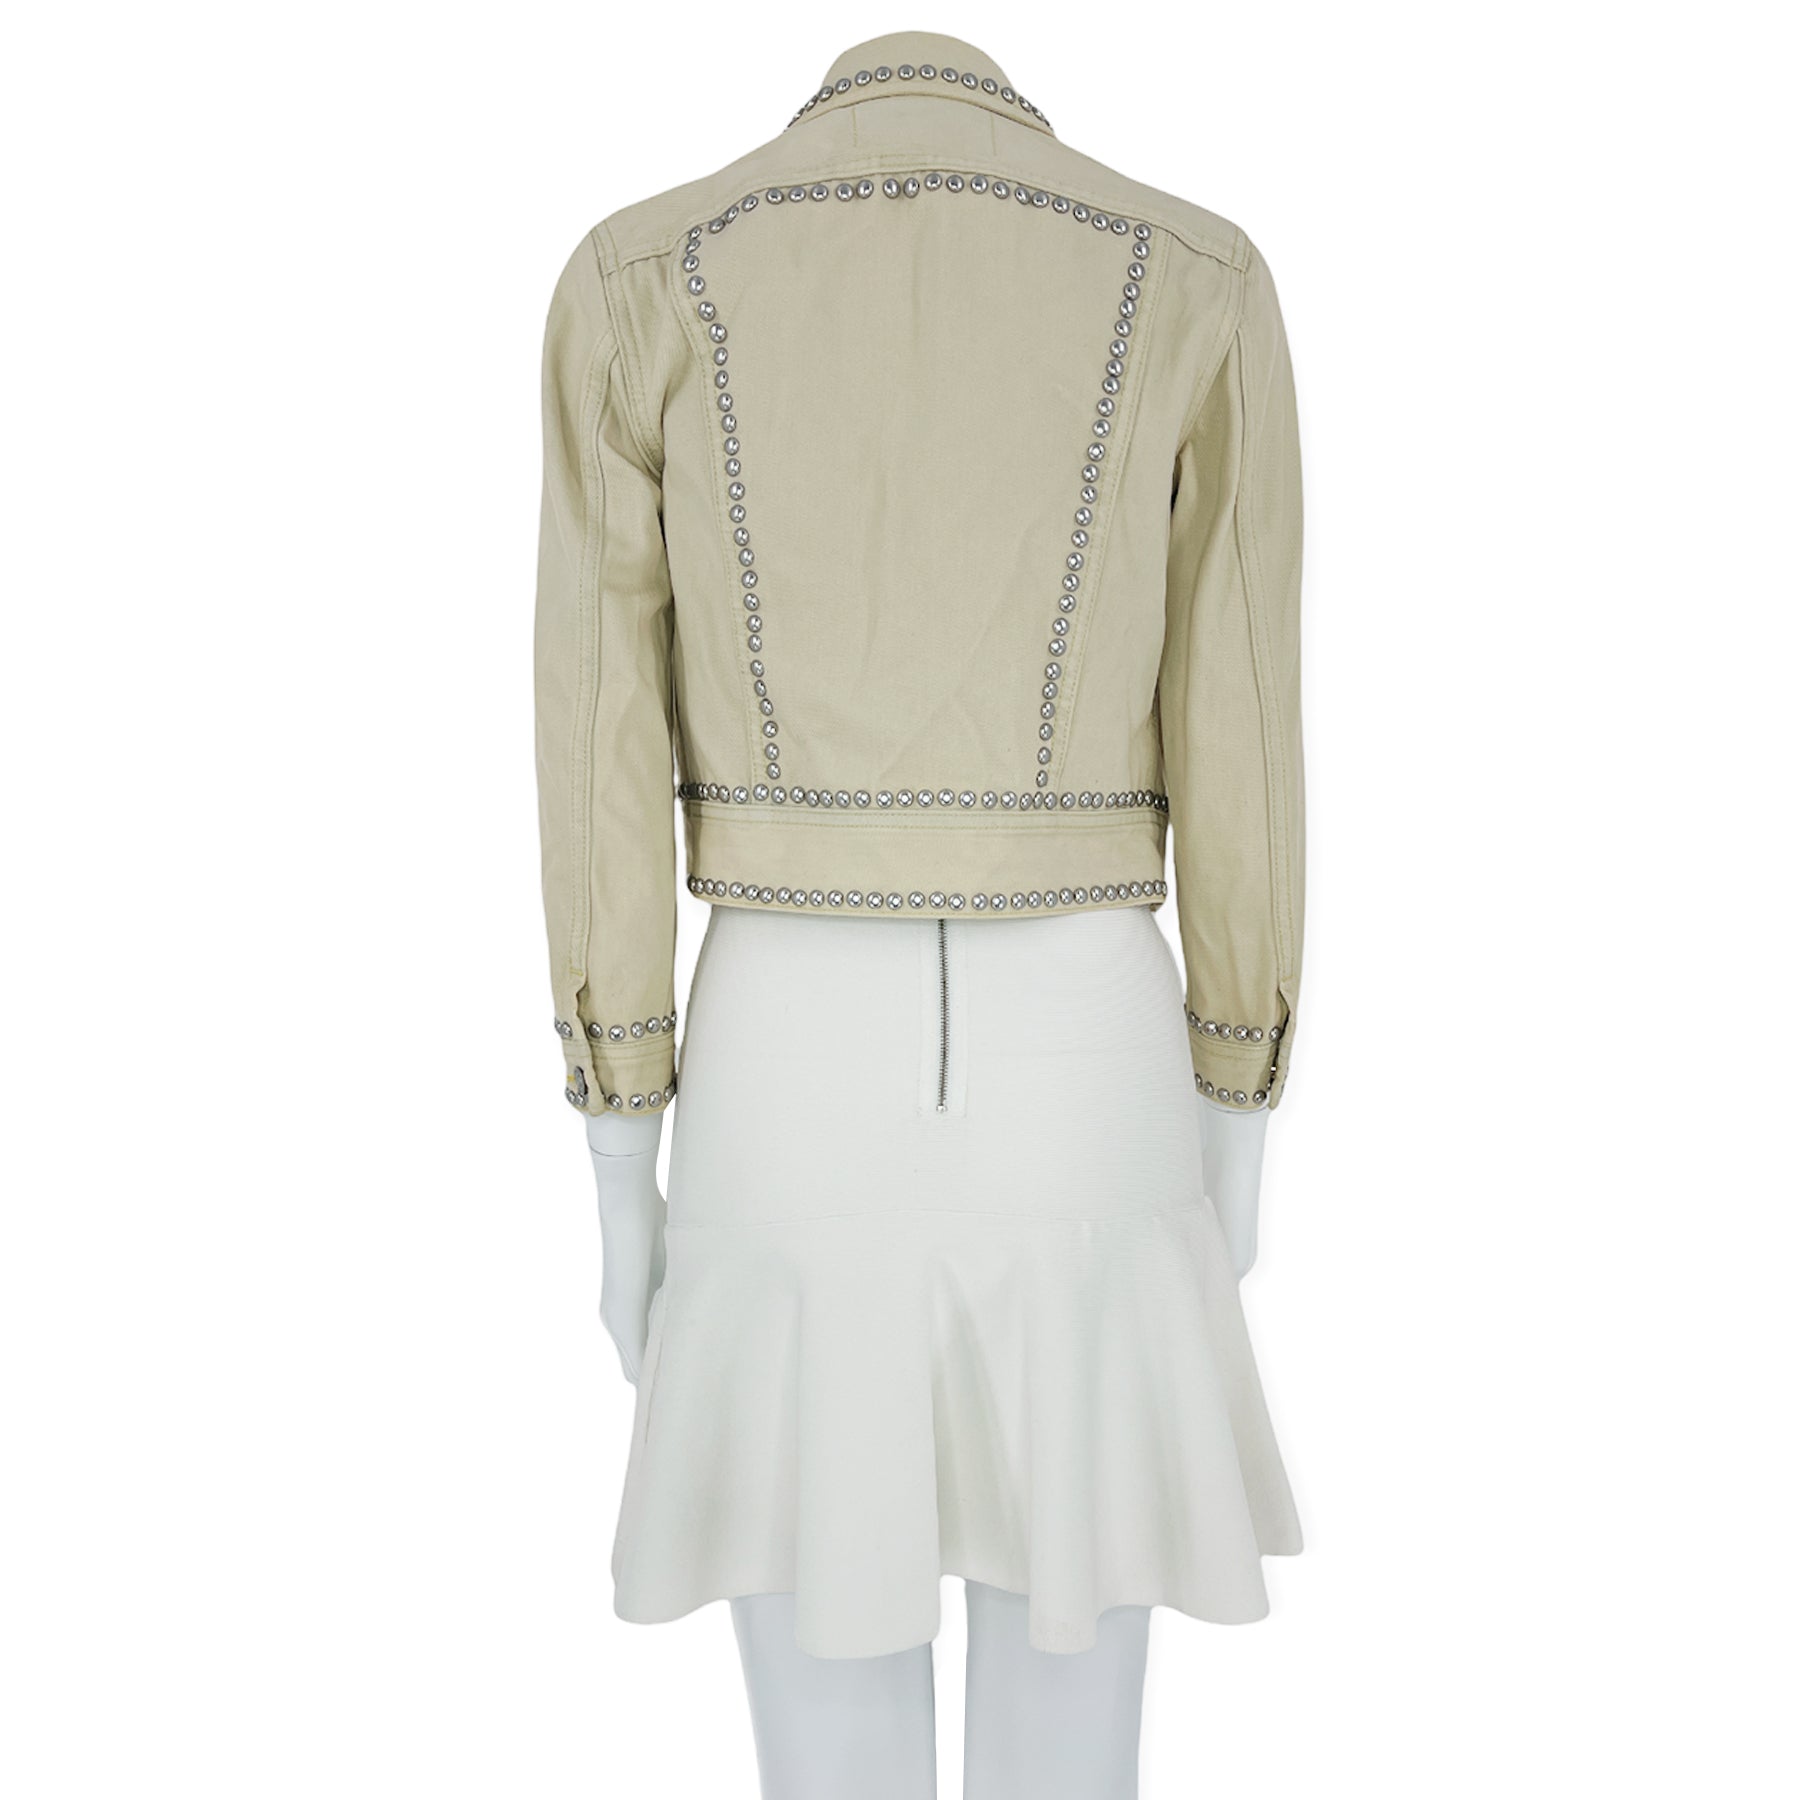 XS size 100% cotton Coach Jacket in beige